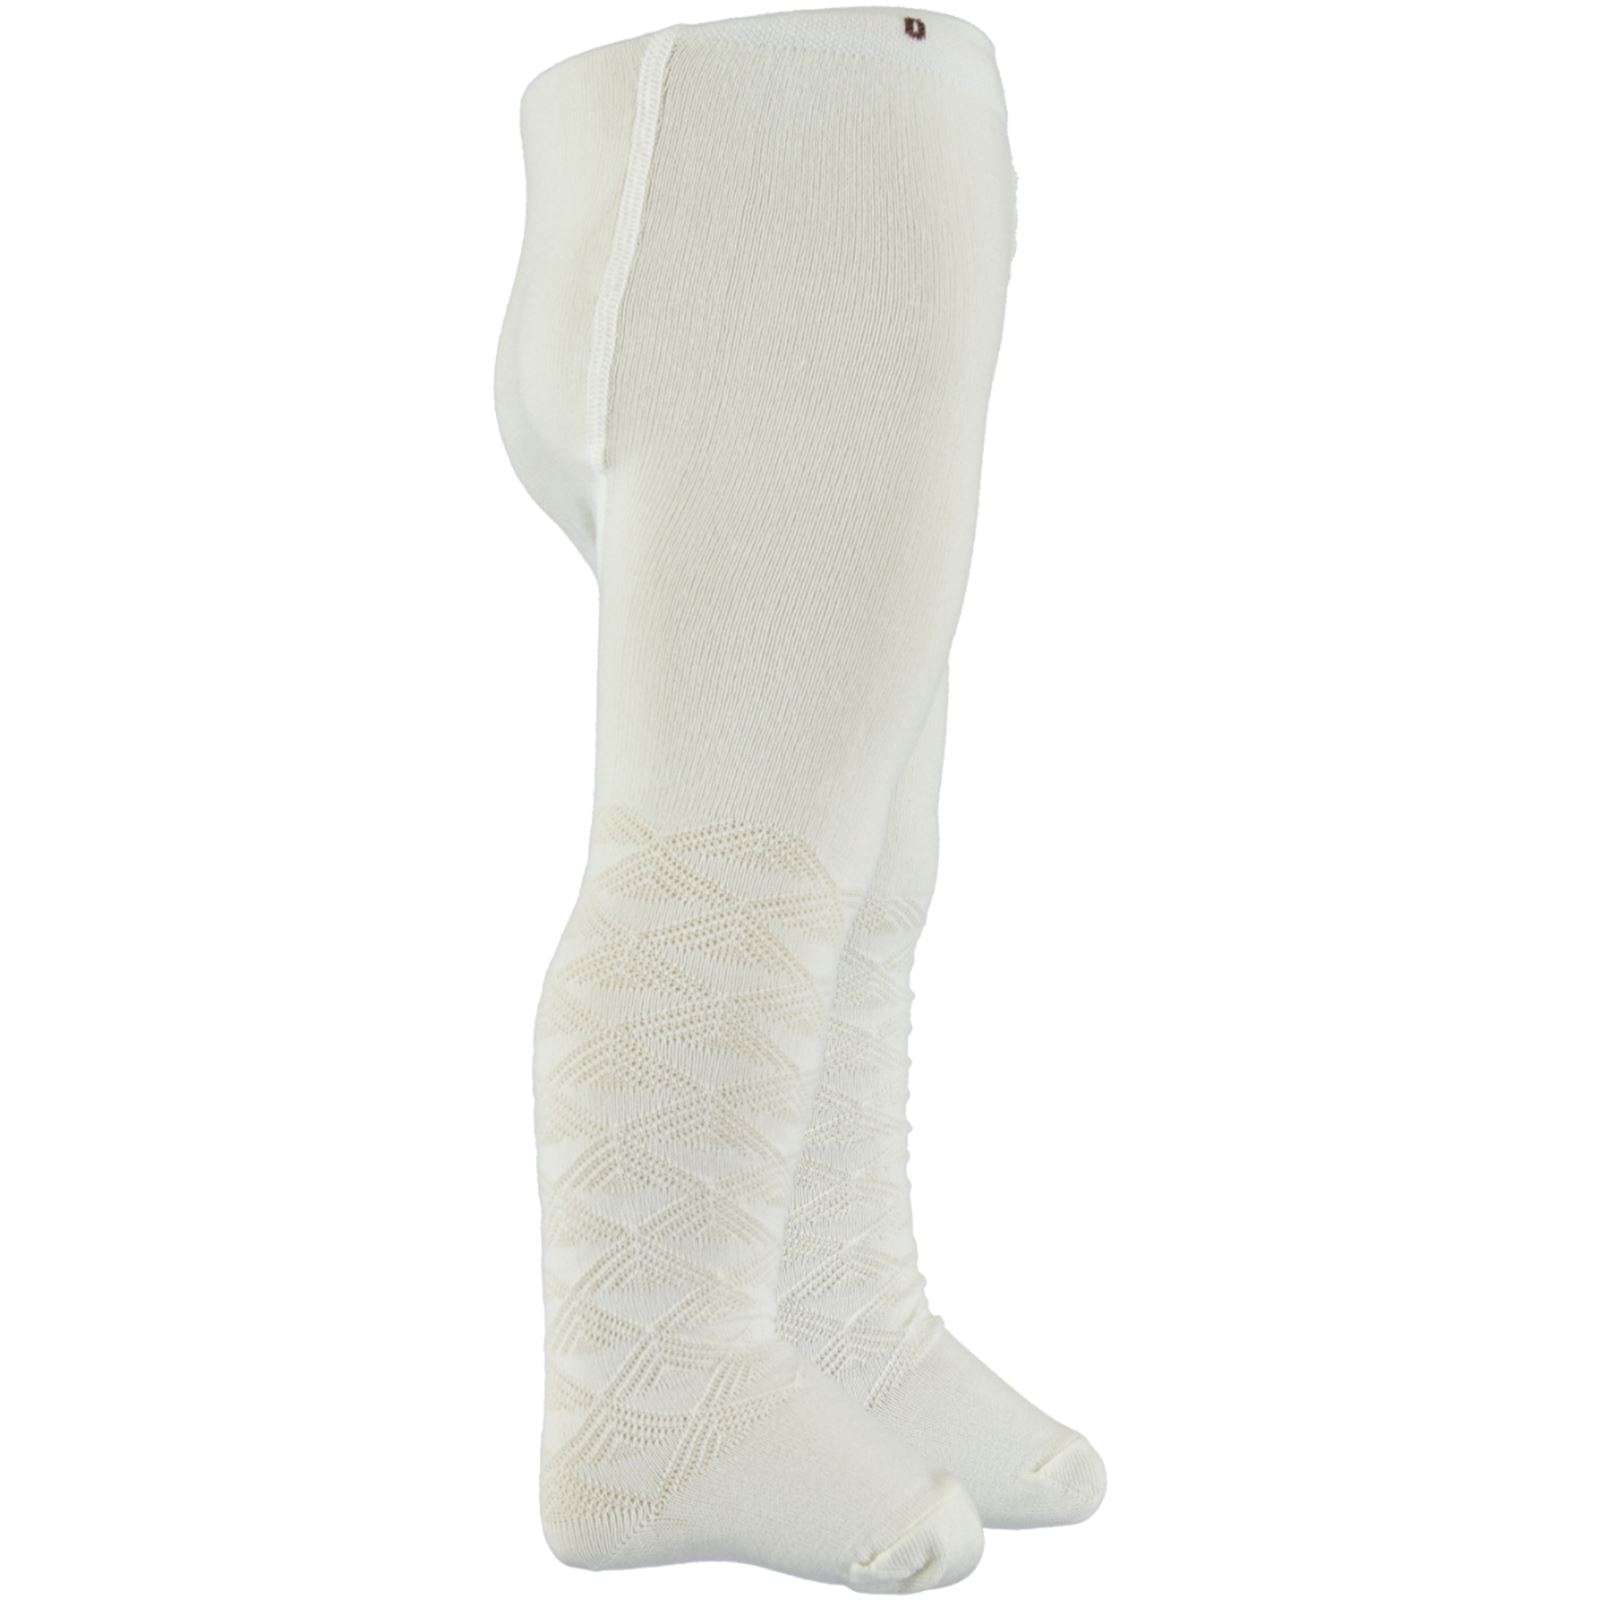 Civil Külotlu Çorap 0-12 Yaş Ekru